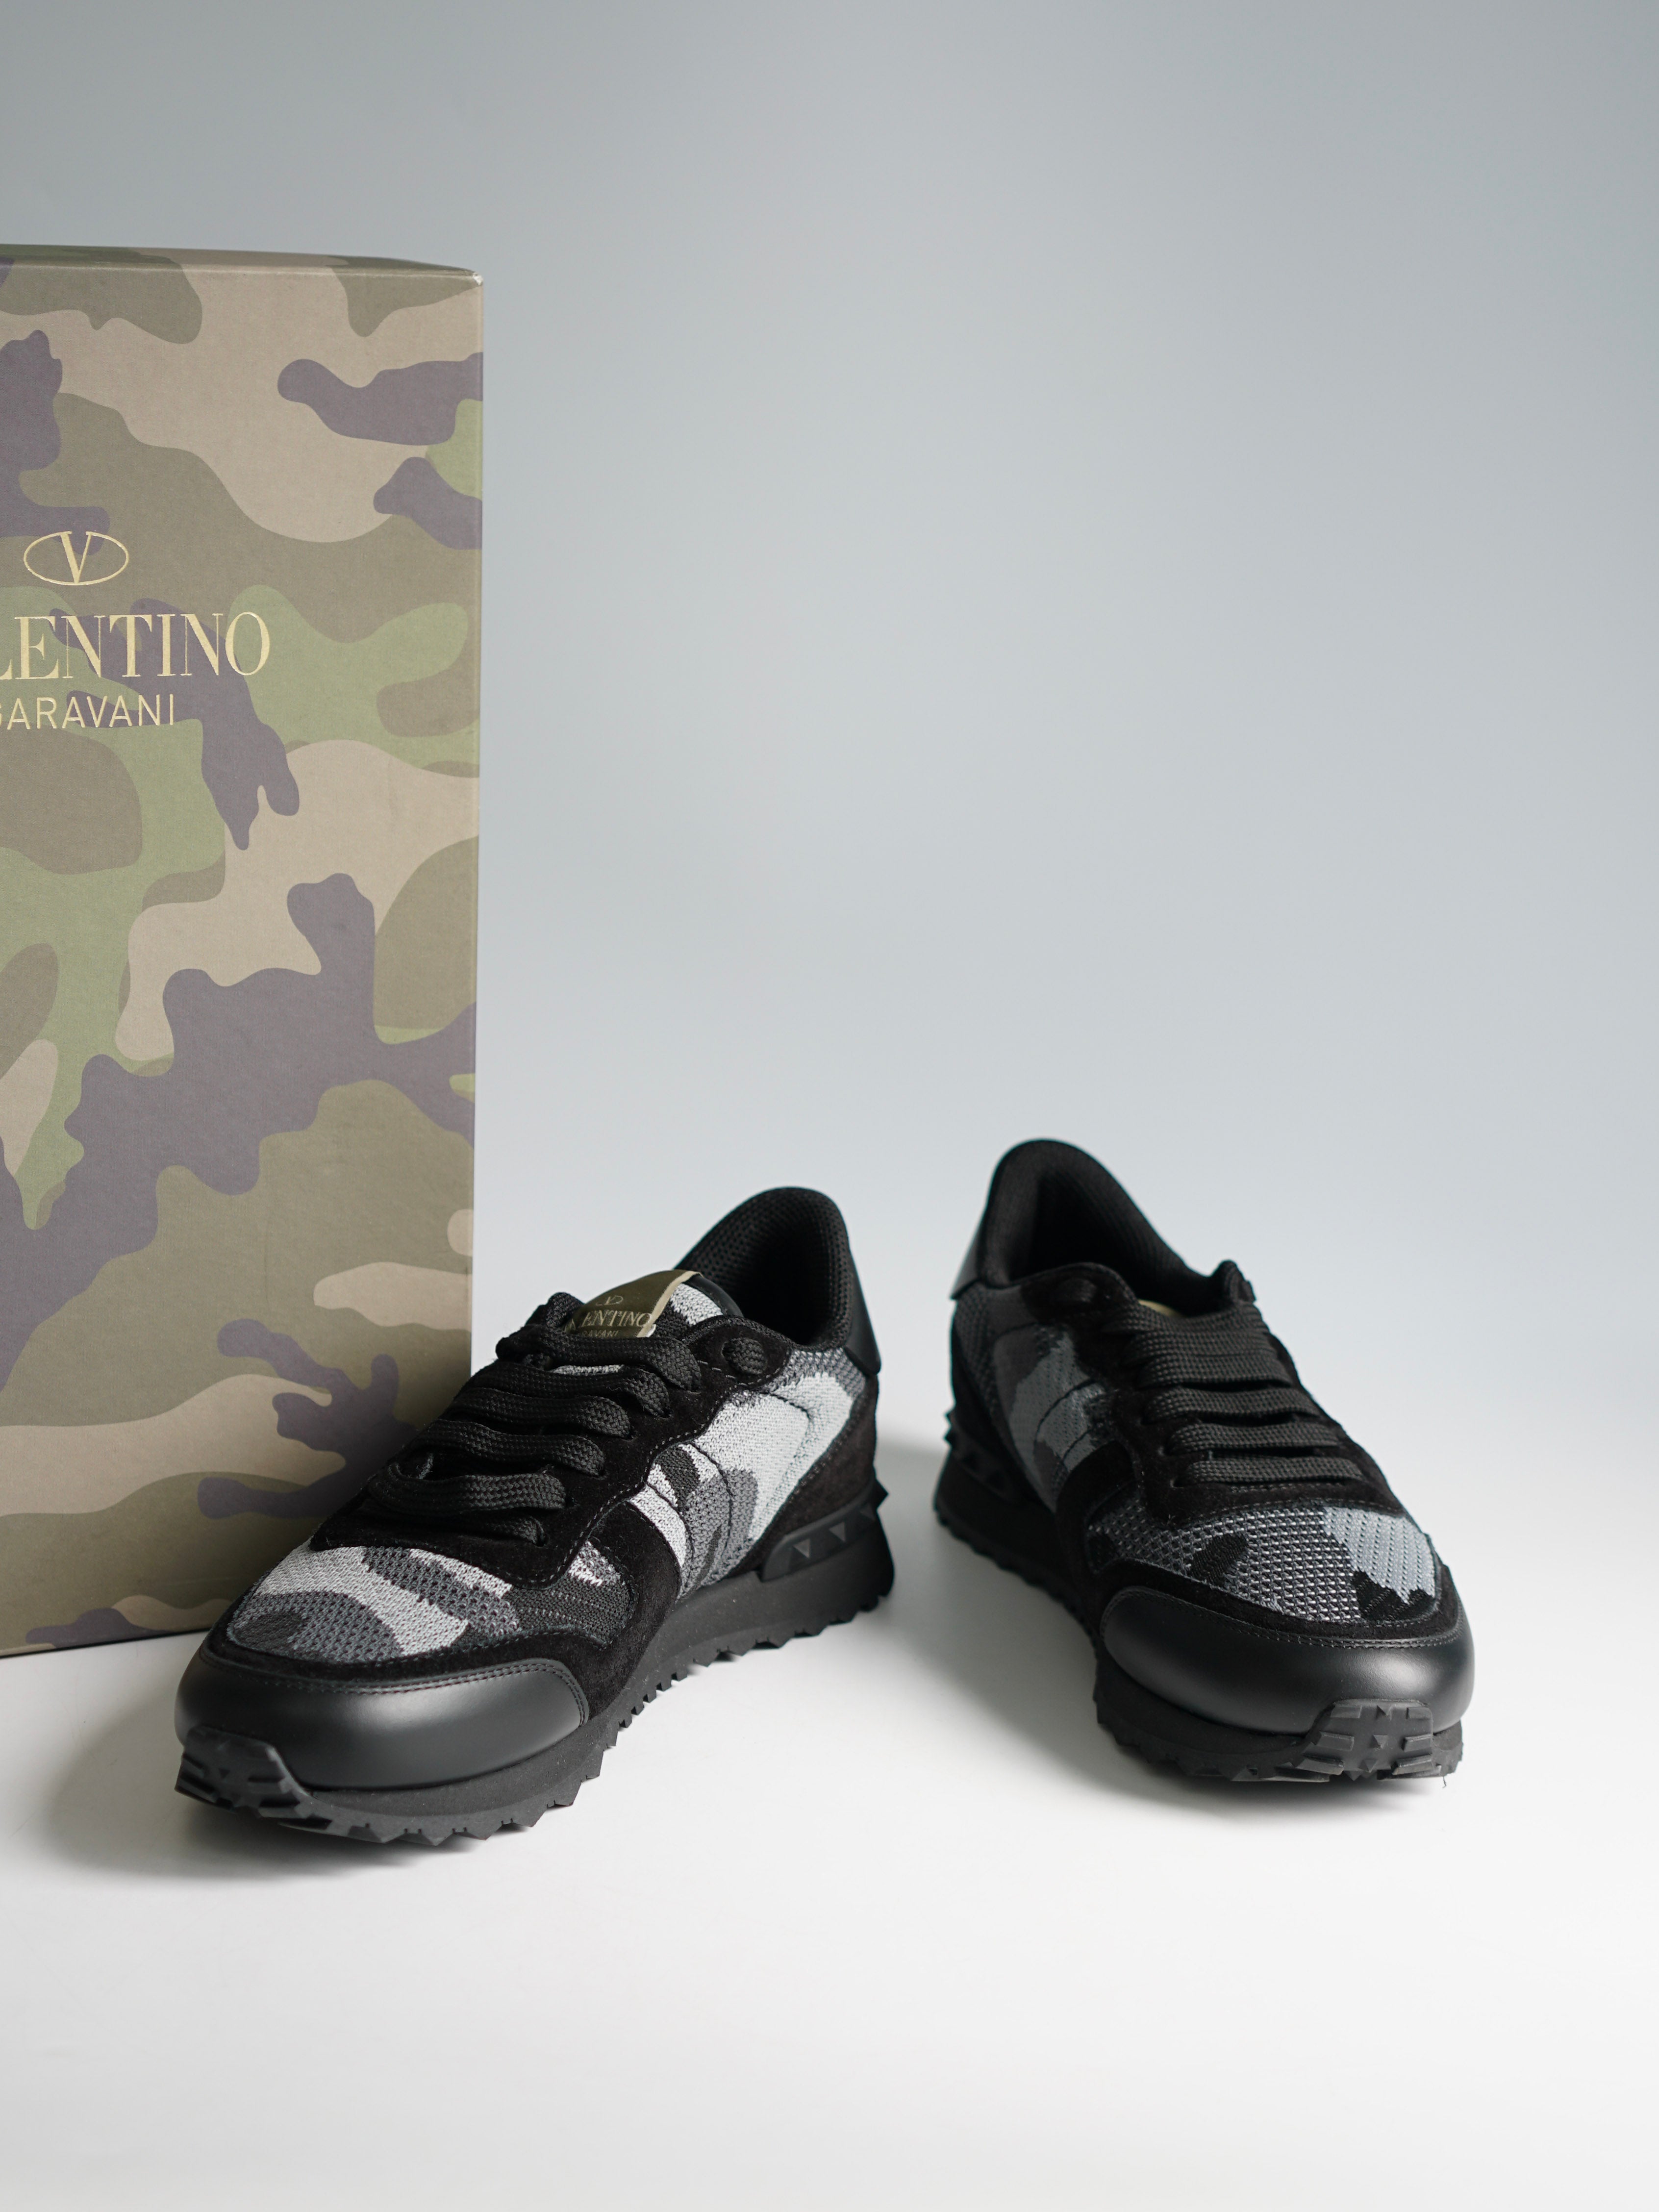 Valentino Garavani Rockrunner Mesh Fabric Camouflage Monochrome